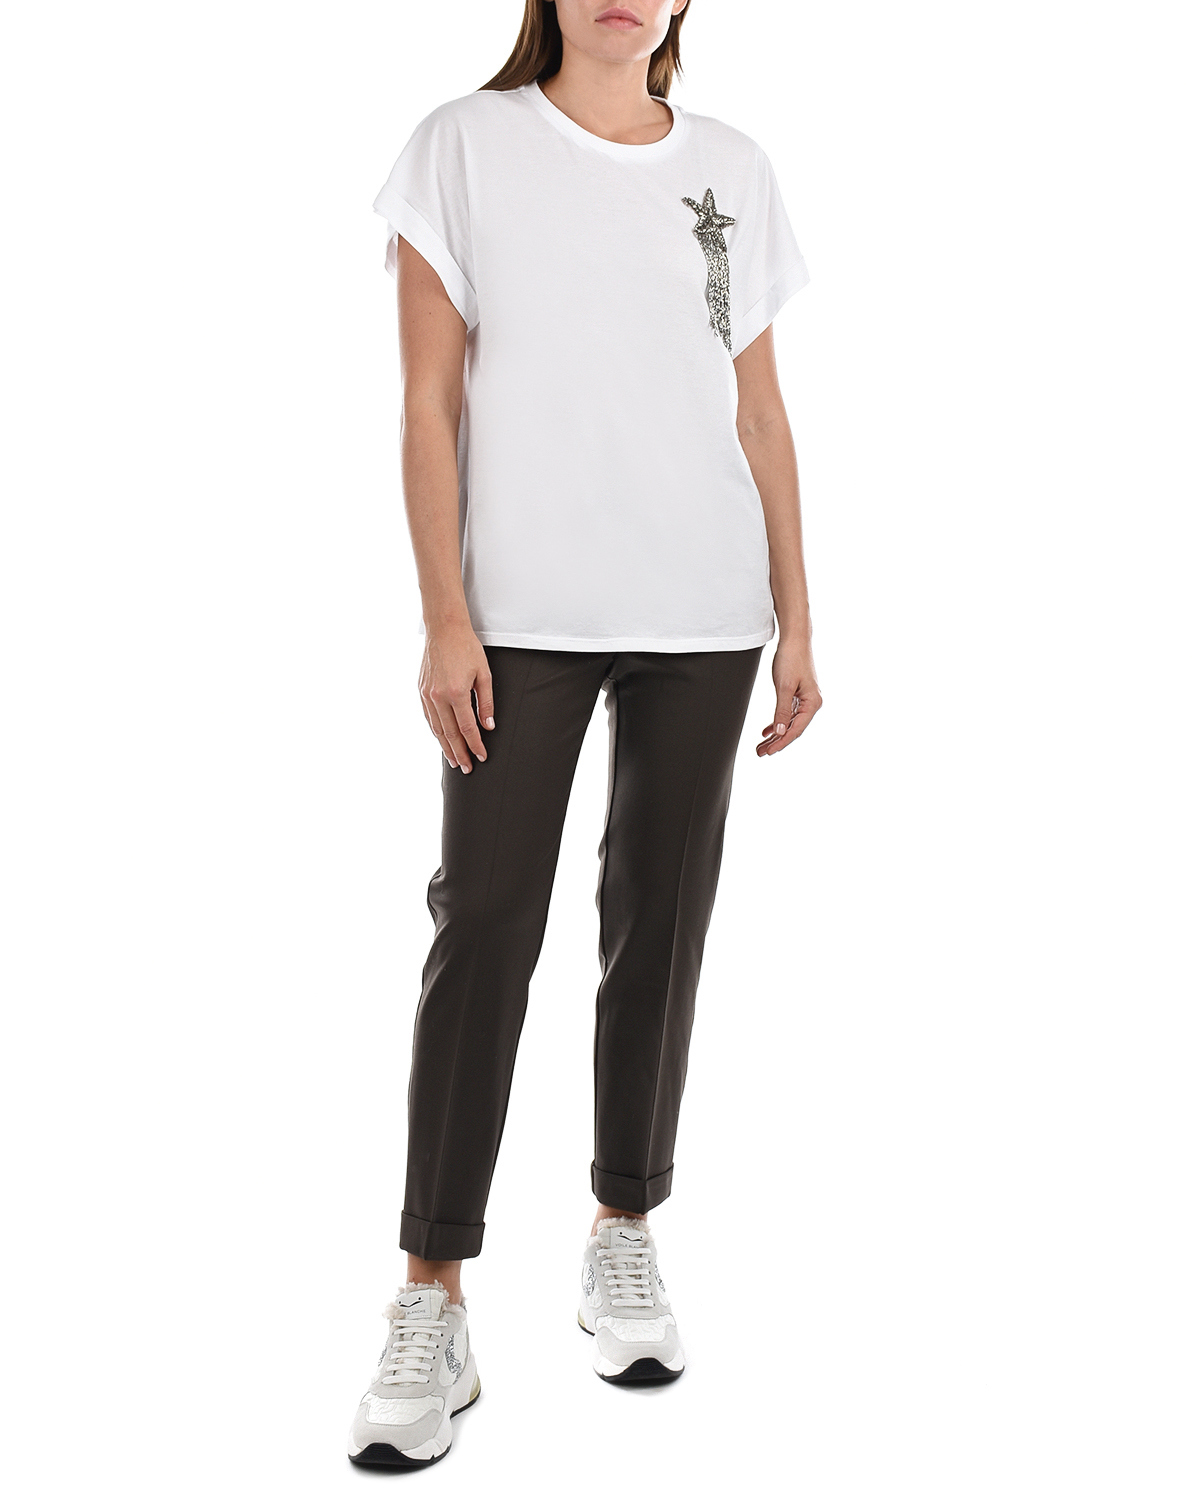 Белая футболка с вышивкой "Звезда" TWINSET, размер 38, цвет белый - фото 3